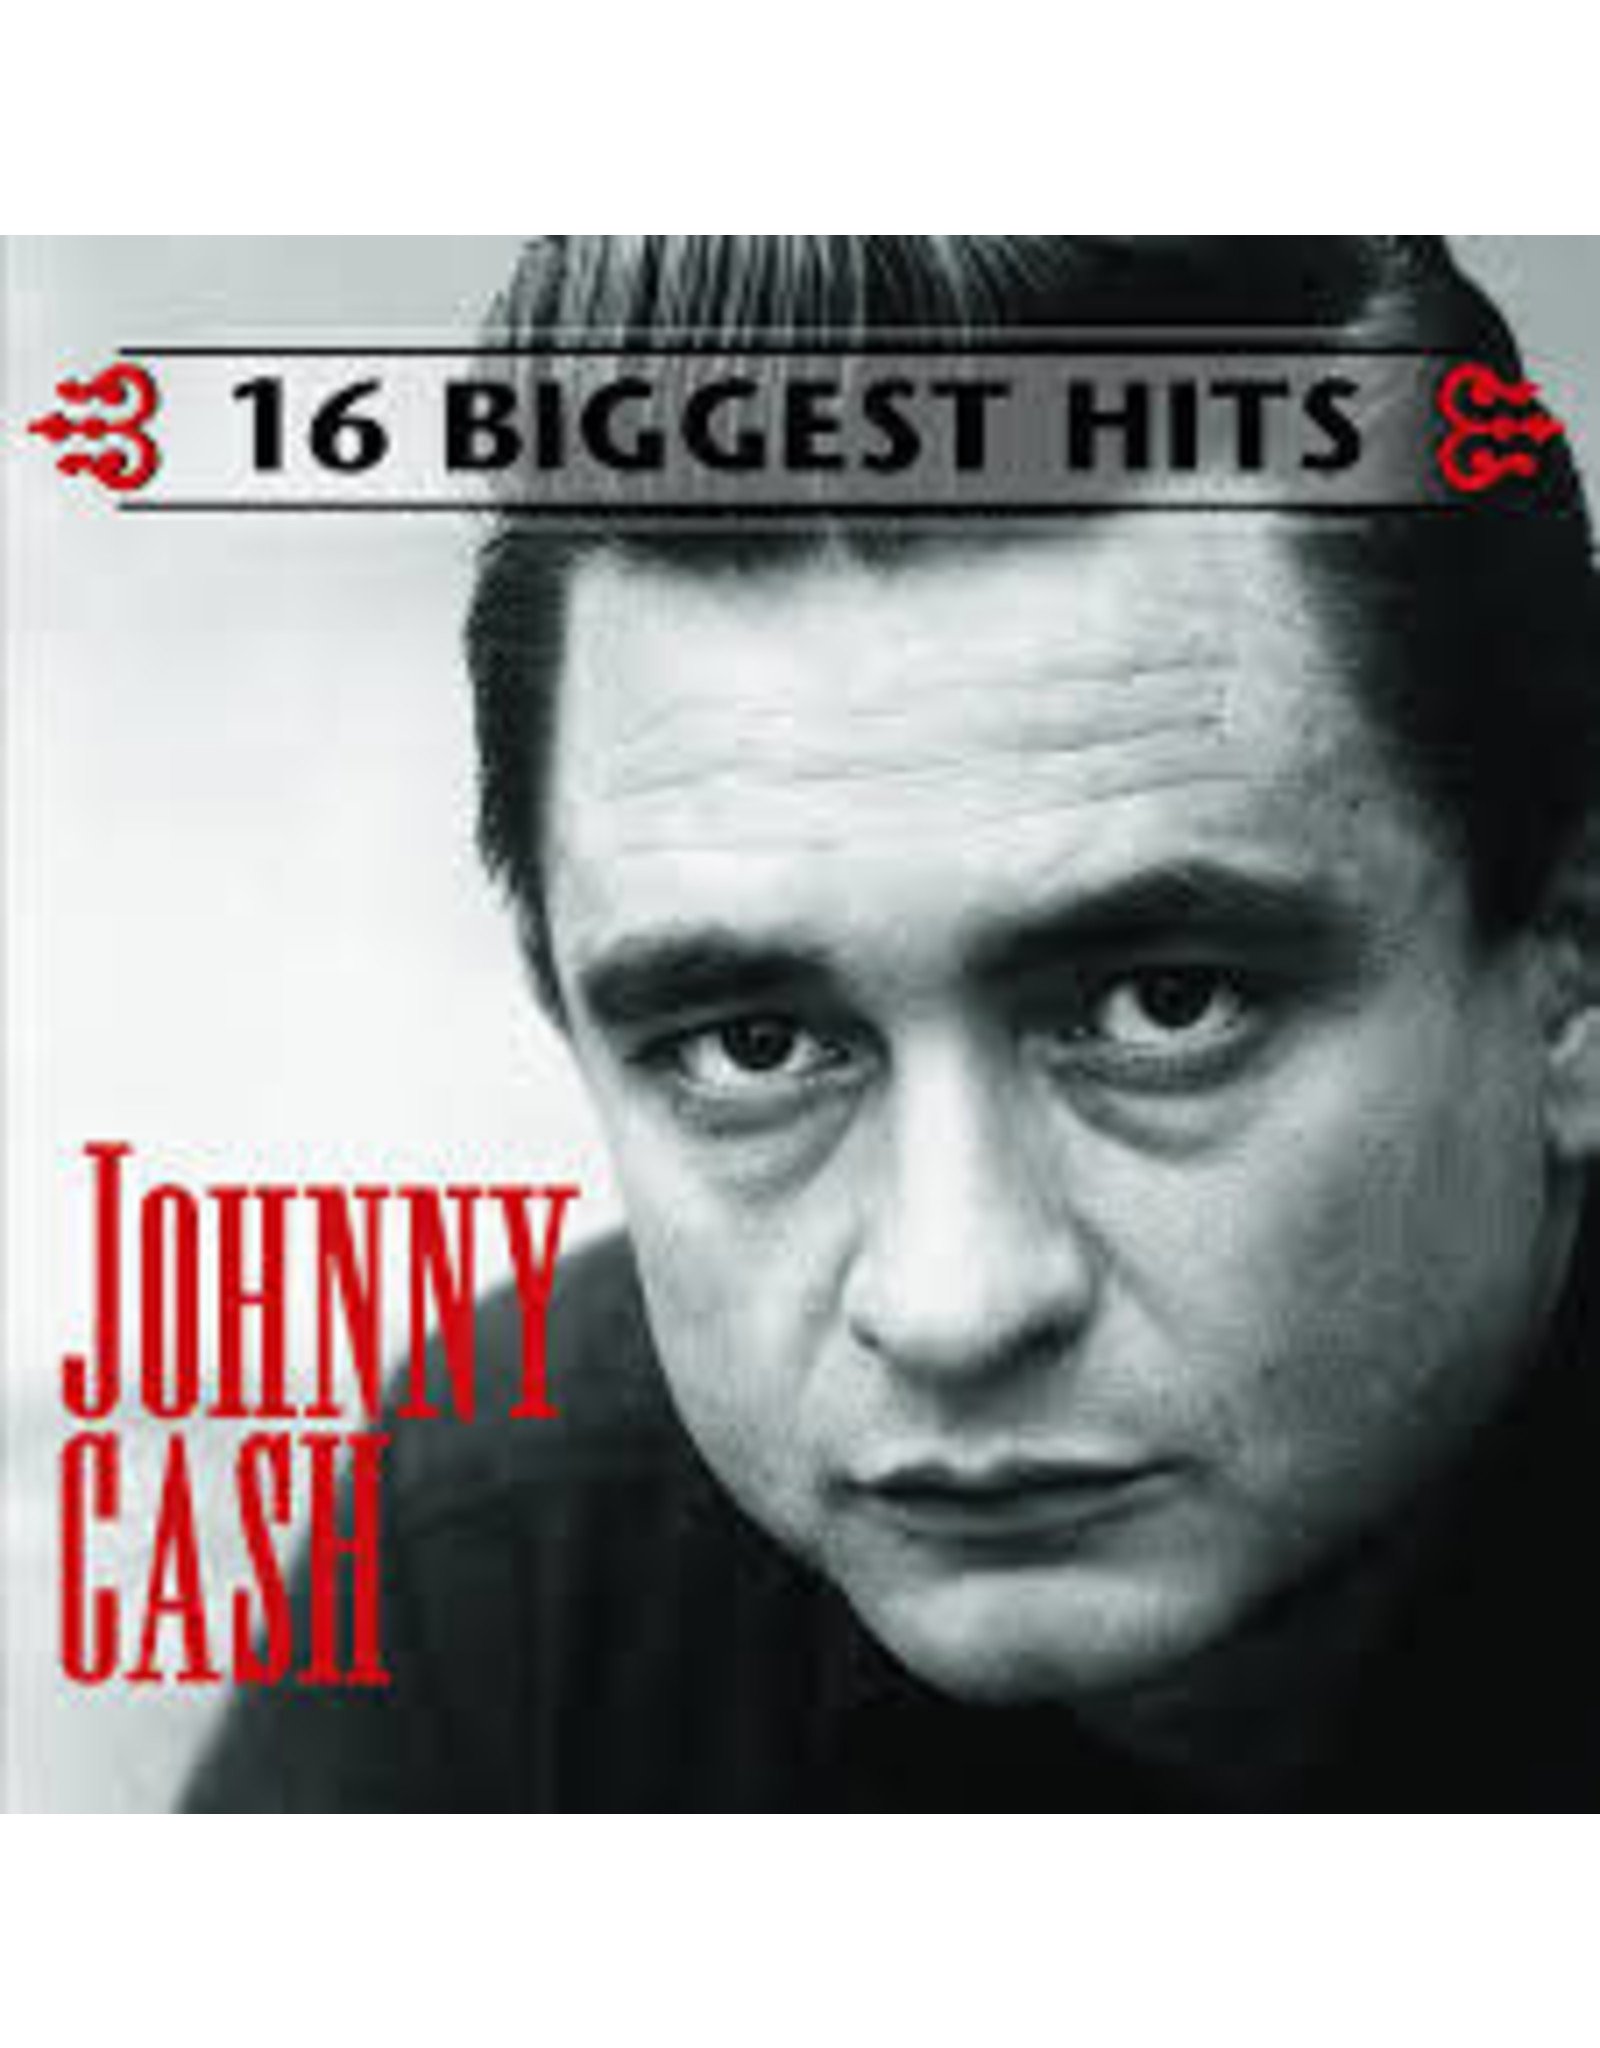 Johnny Cash - 16 Biggest Hits (Music On Vinyl)